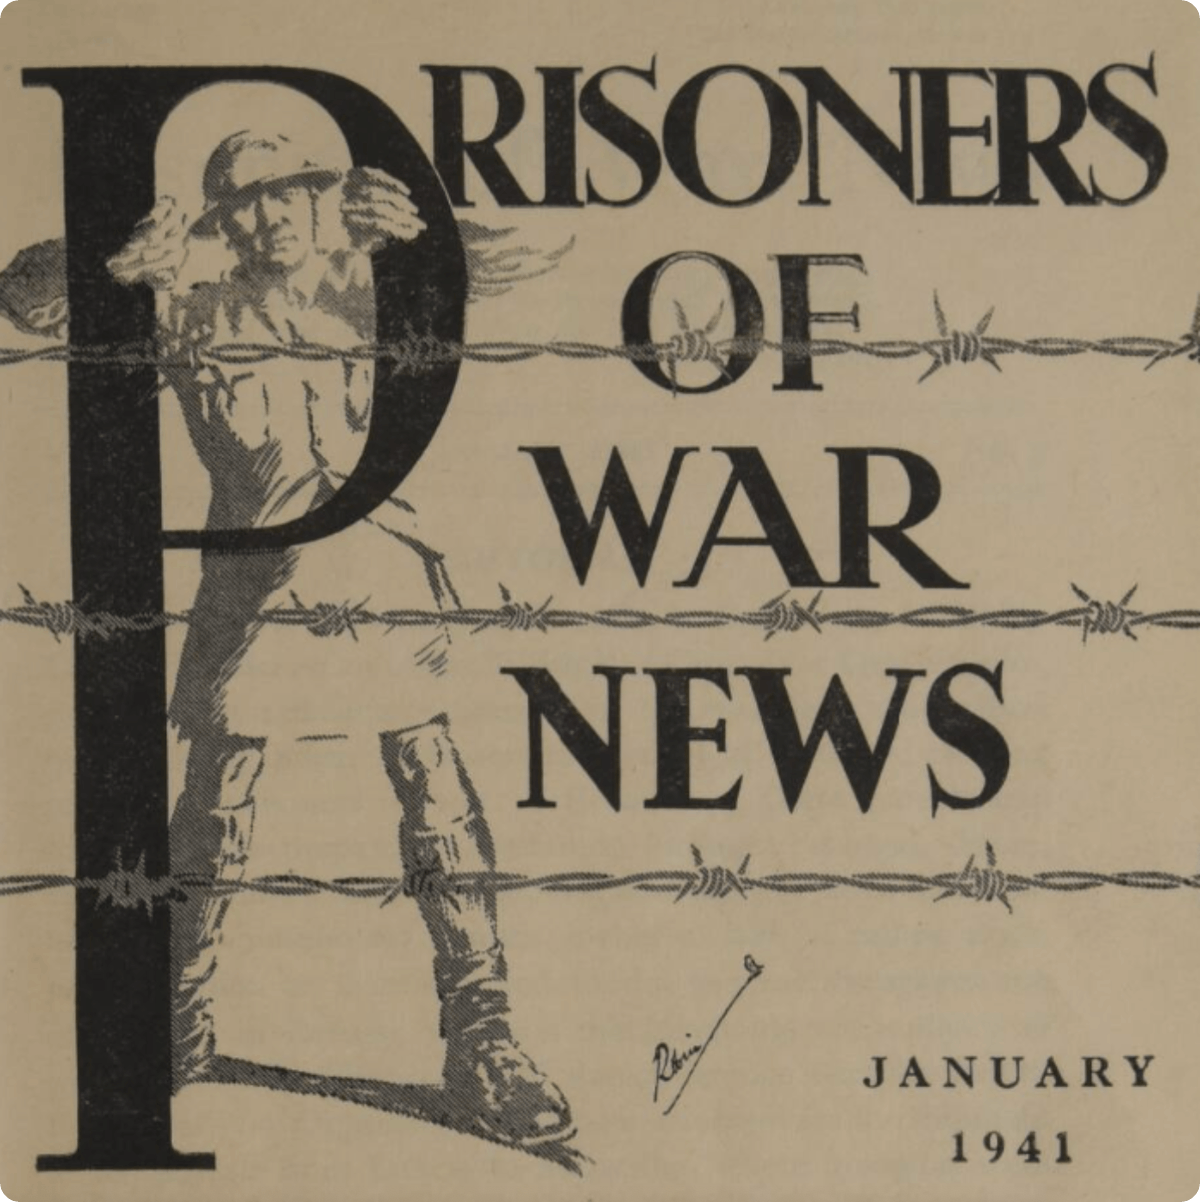 Prisoners of War News.